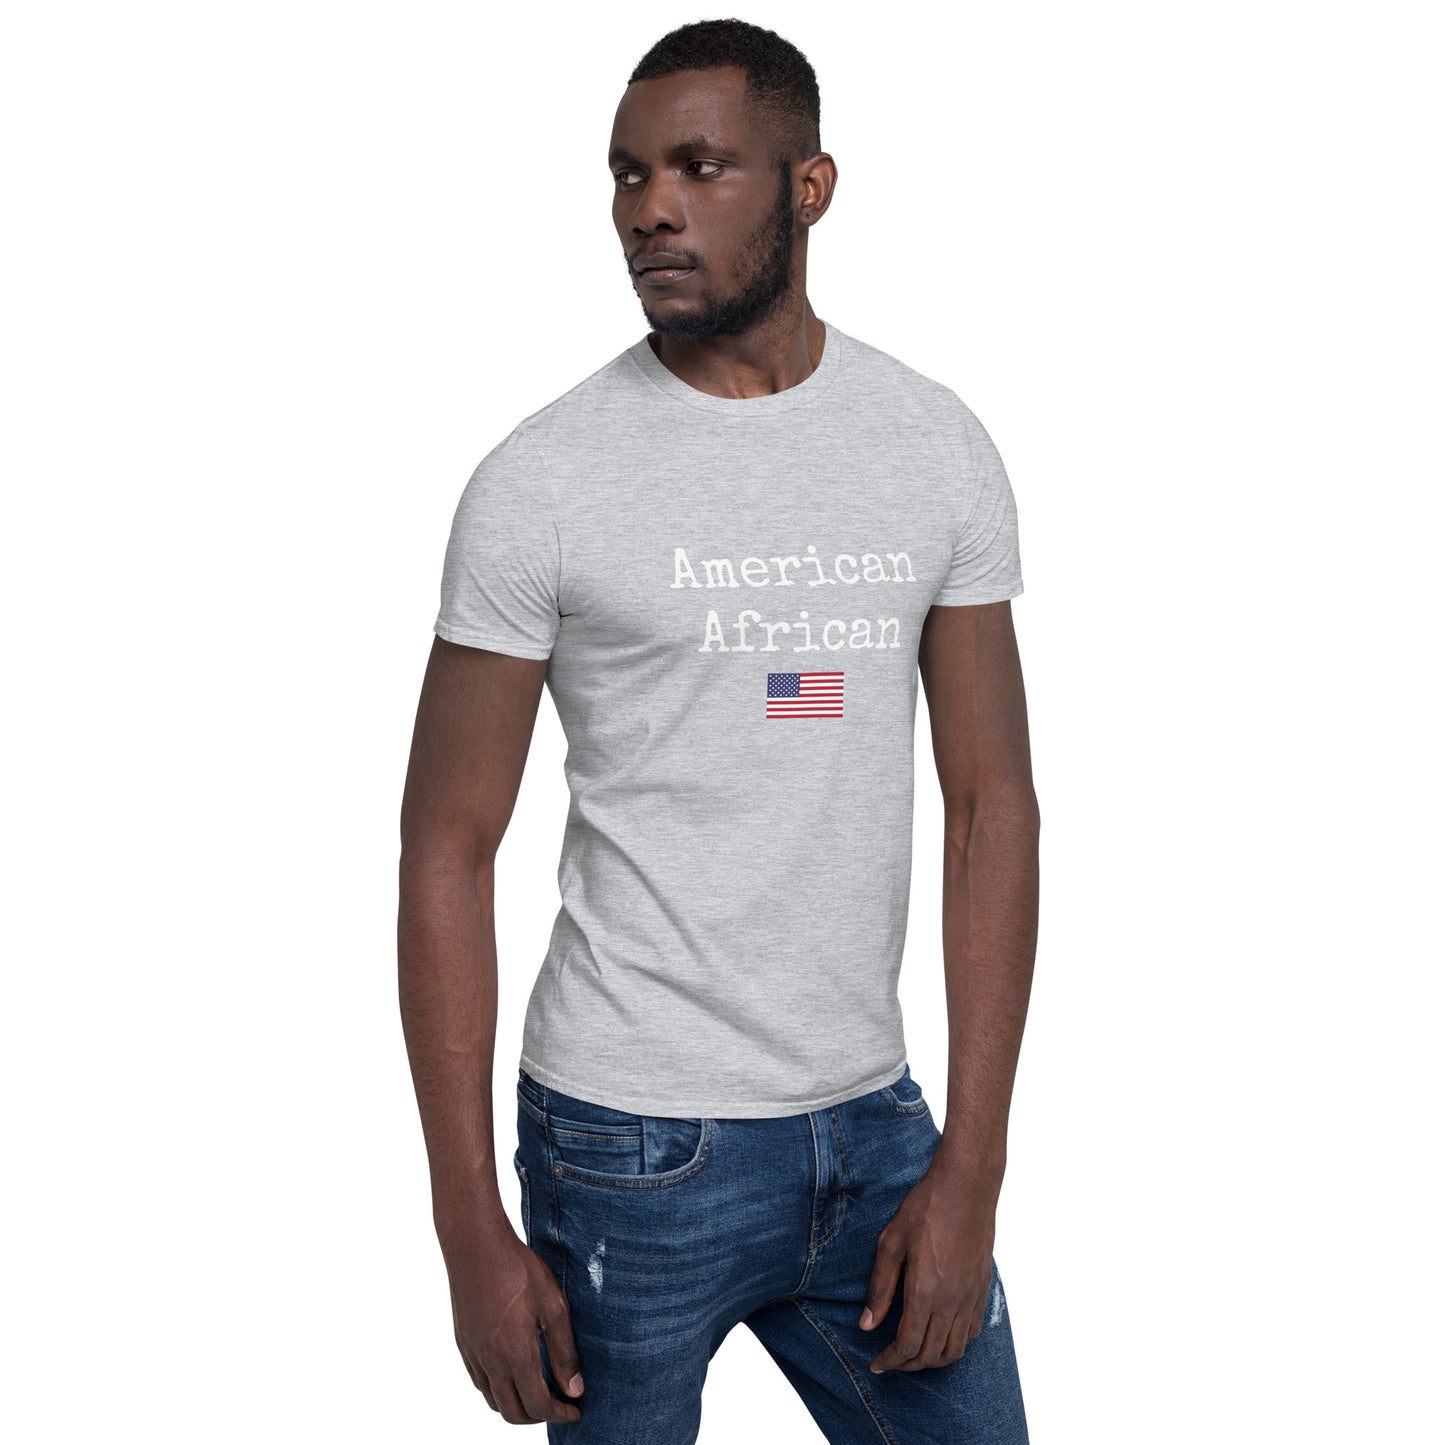 American African Short-Sleeve Unisex T-Shirt